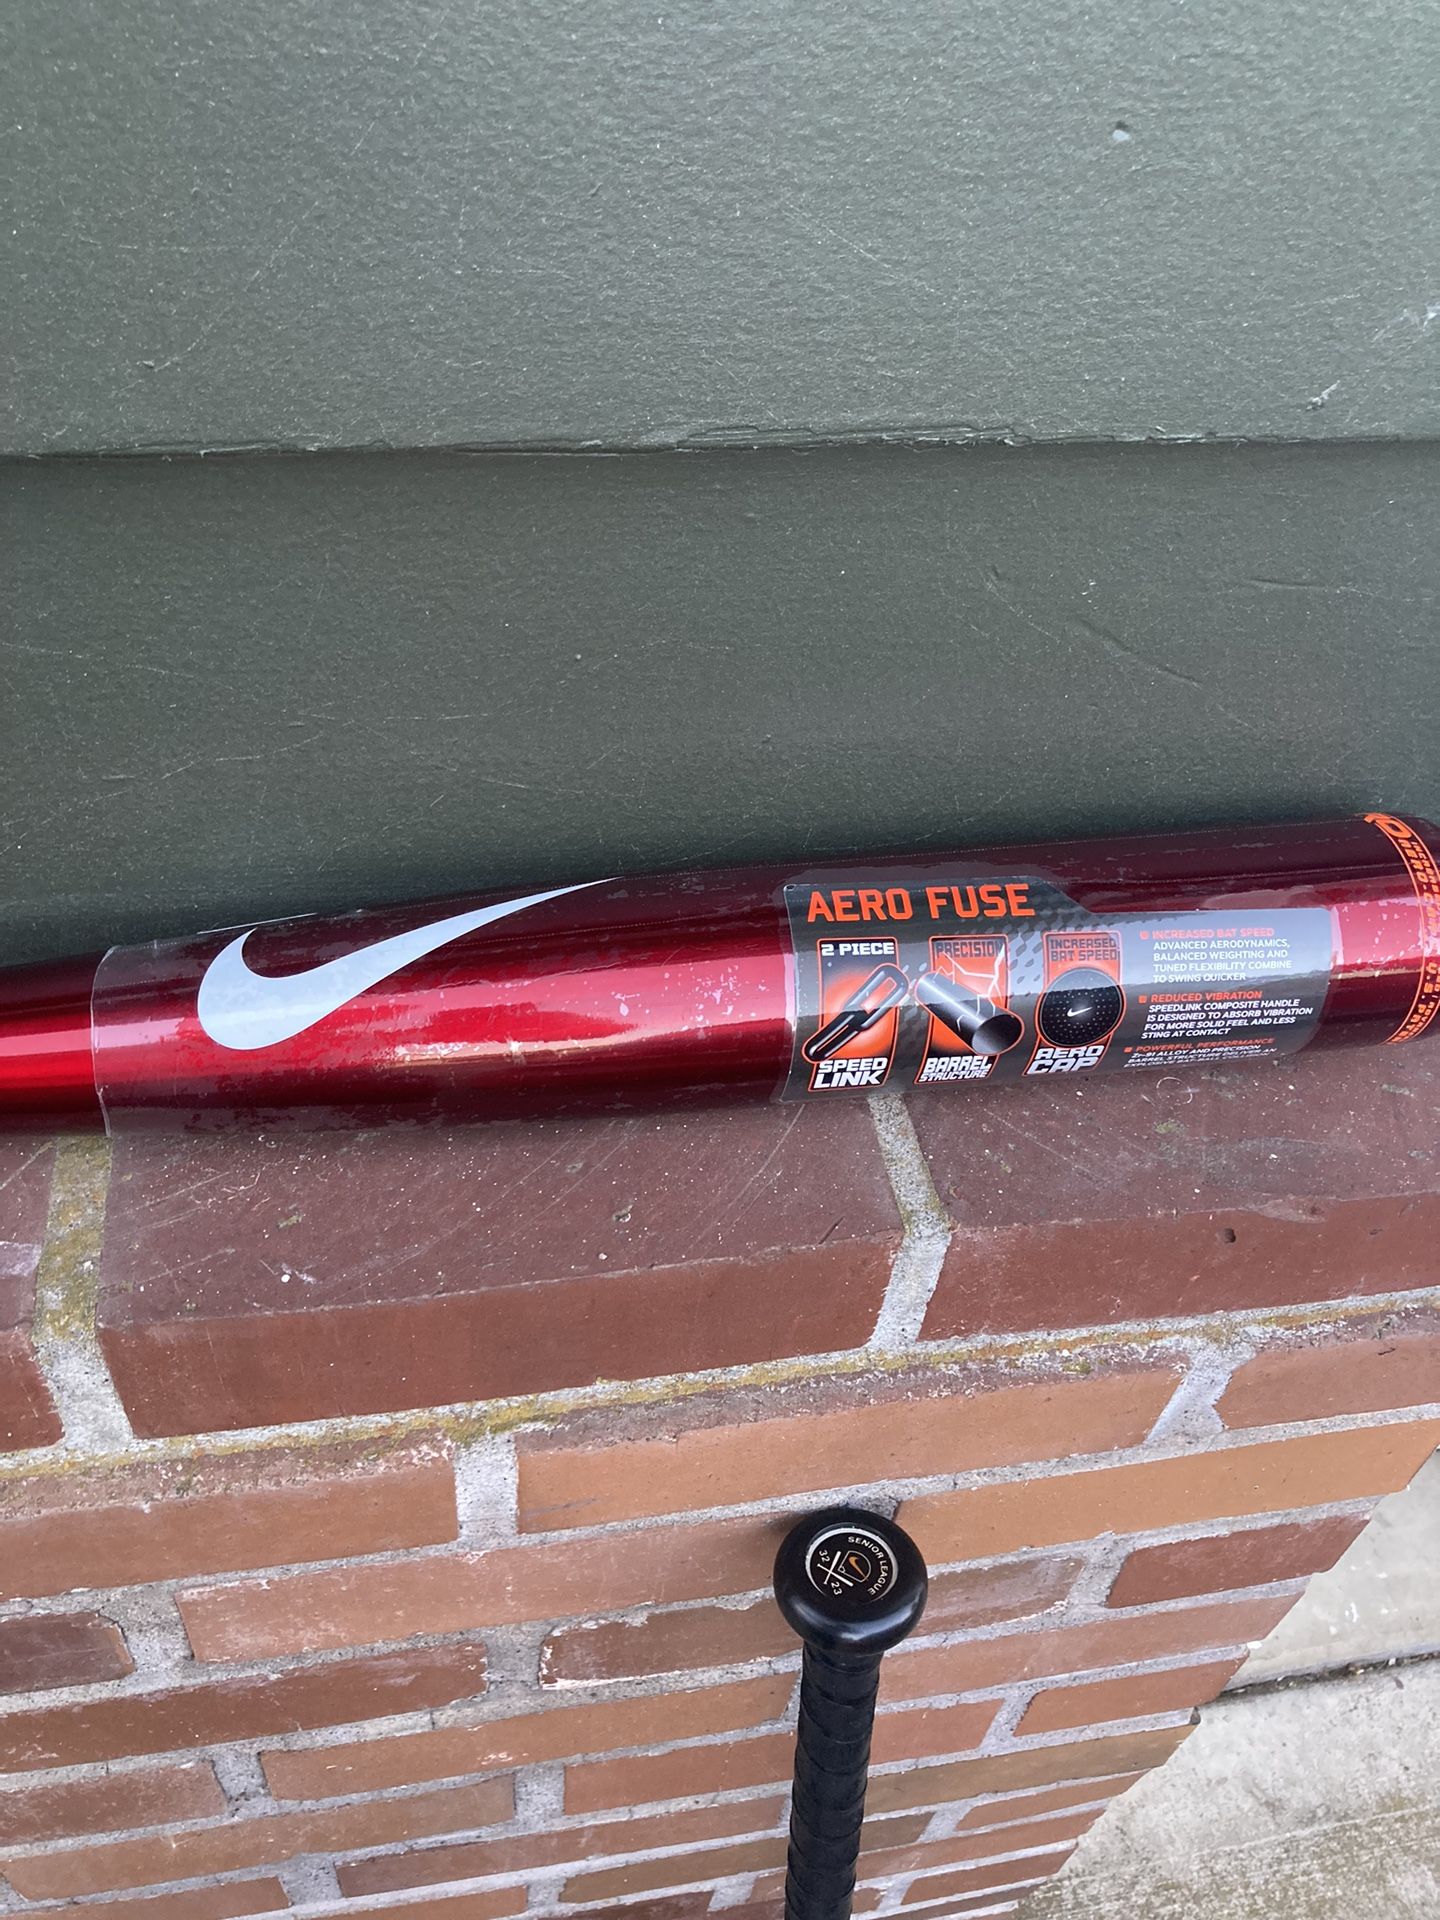 N.O.S. Nike Aero Fuse Cherry Bomb Baseball Bat. Pre- BBCOR. 